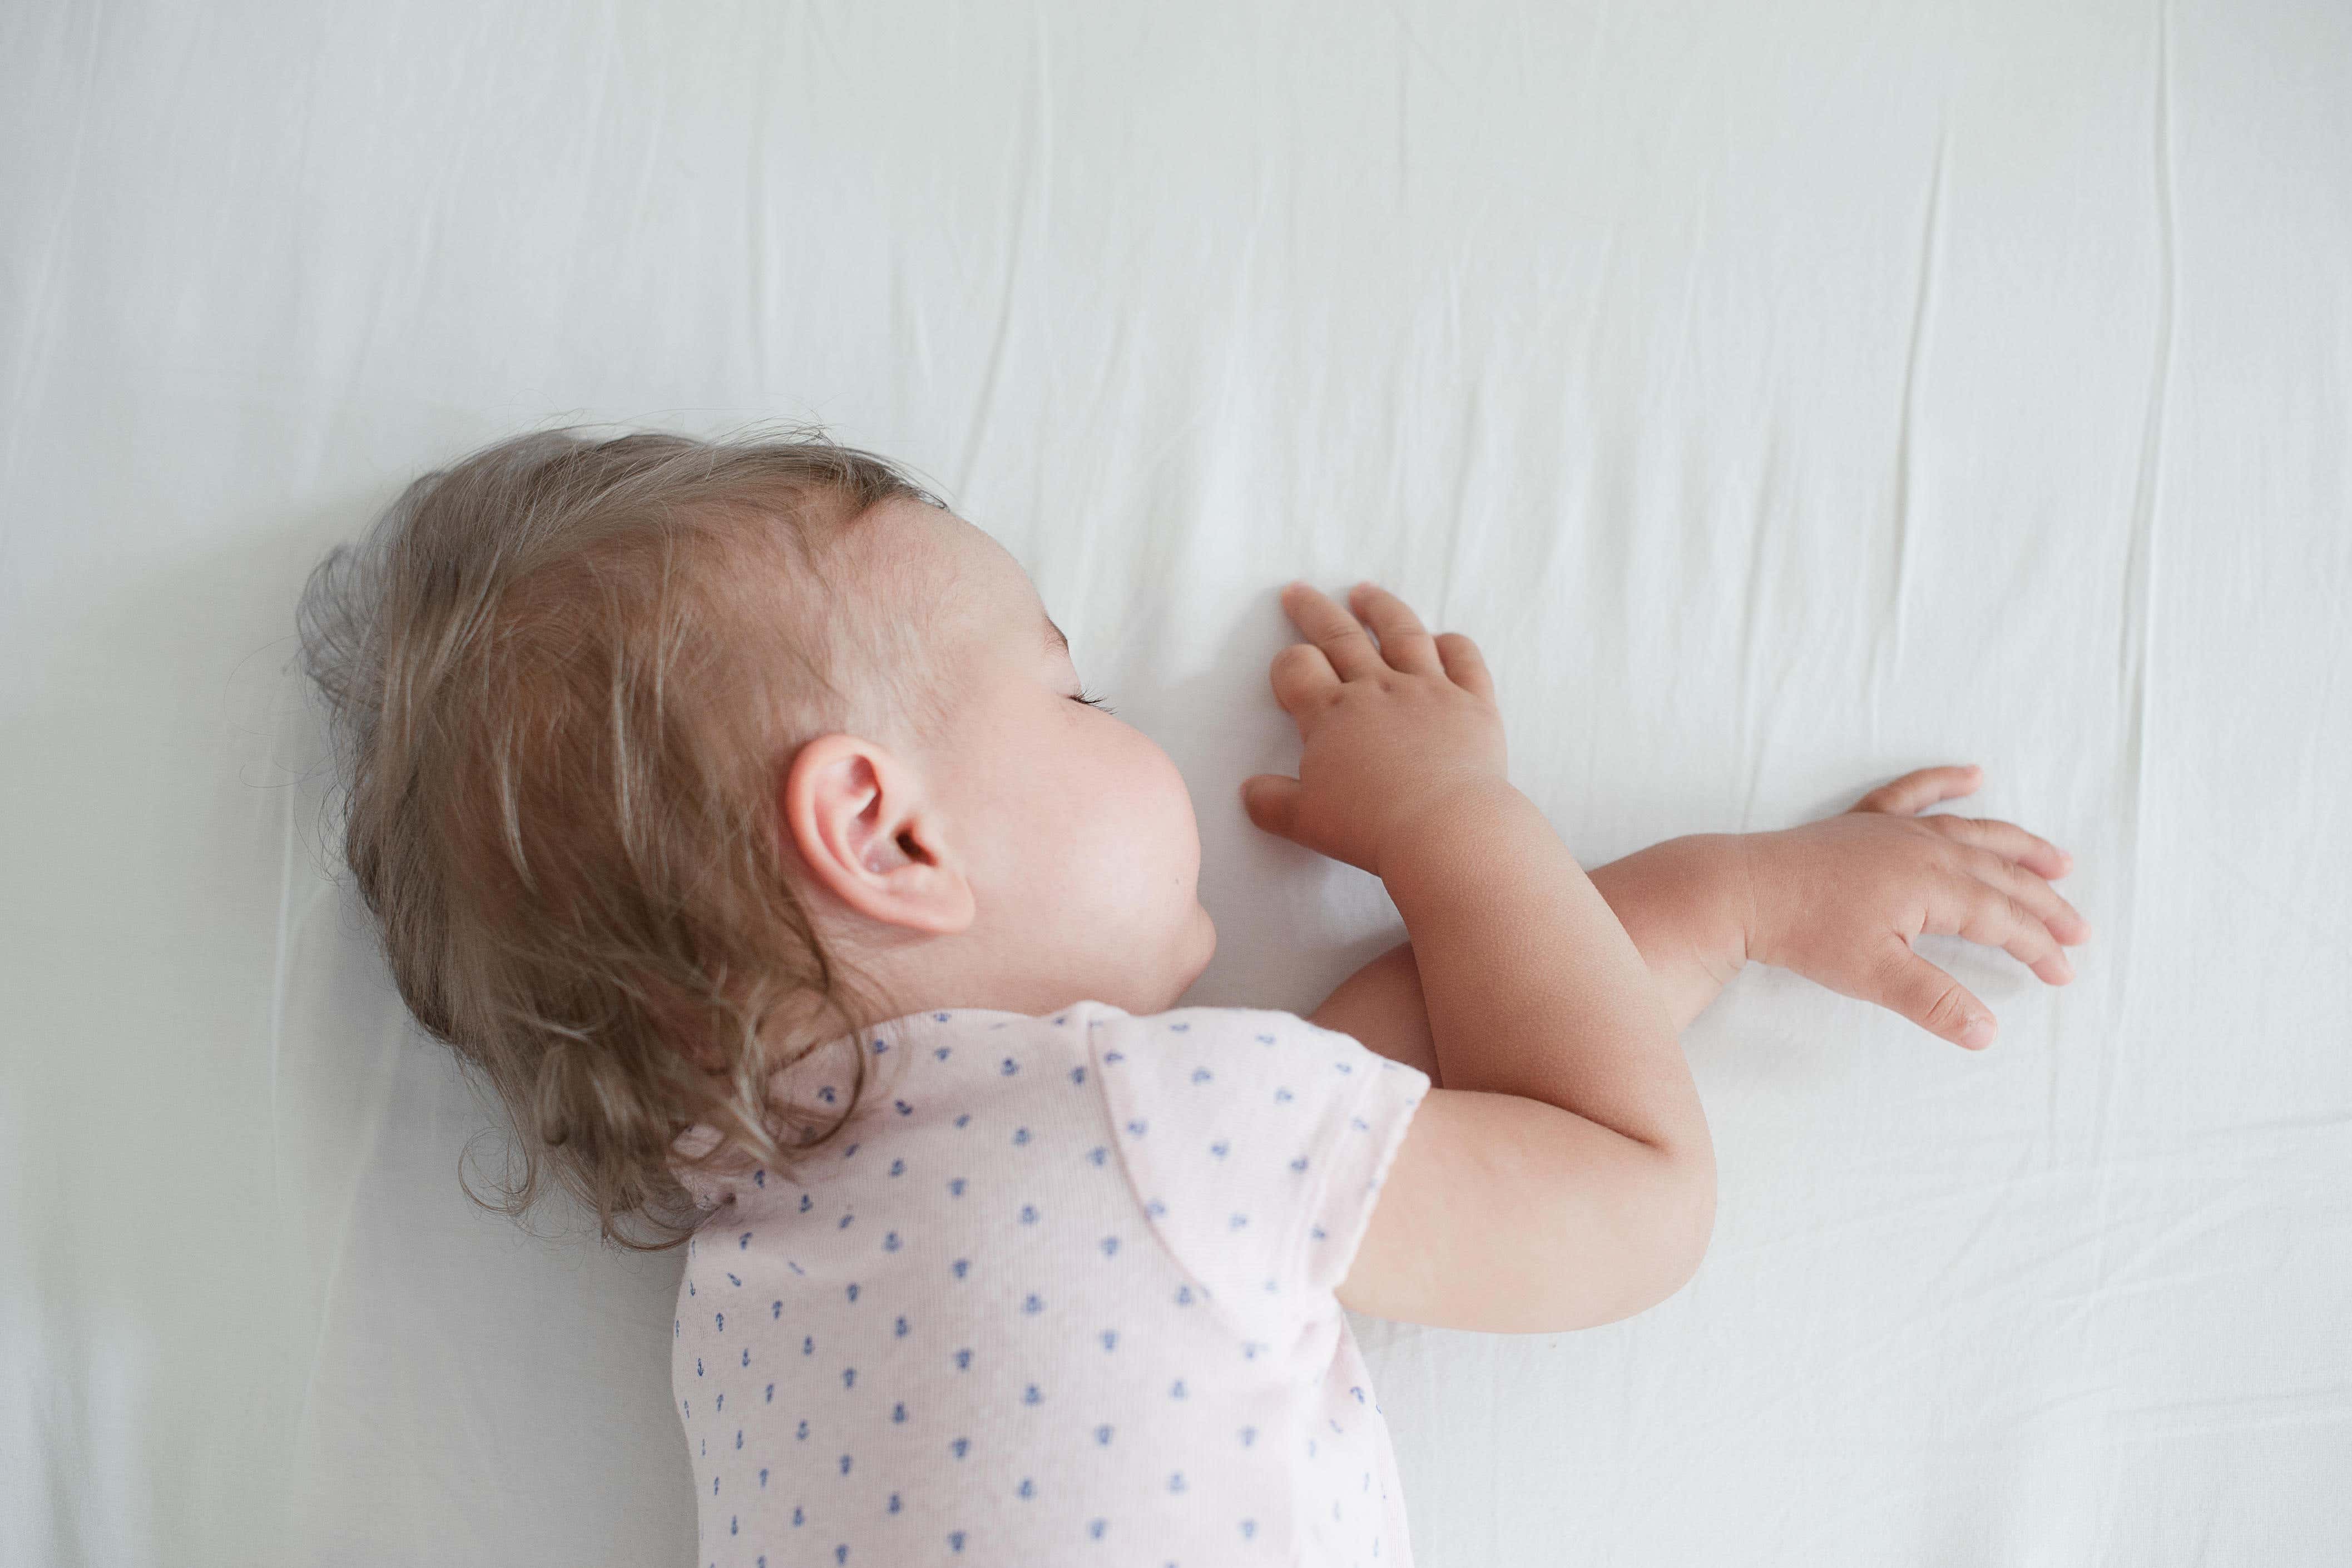 The charity said babies are safest sleeping on their back on a clear, flat, firm sleep surface